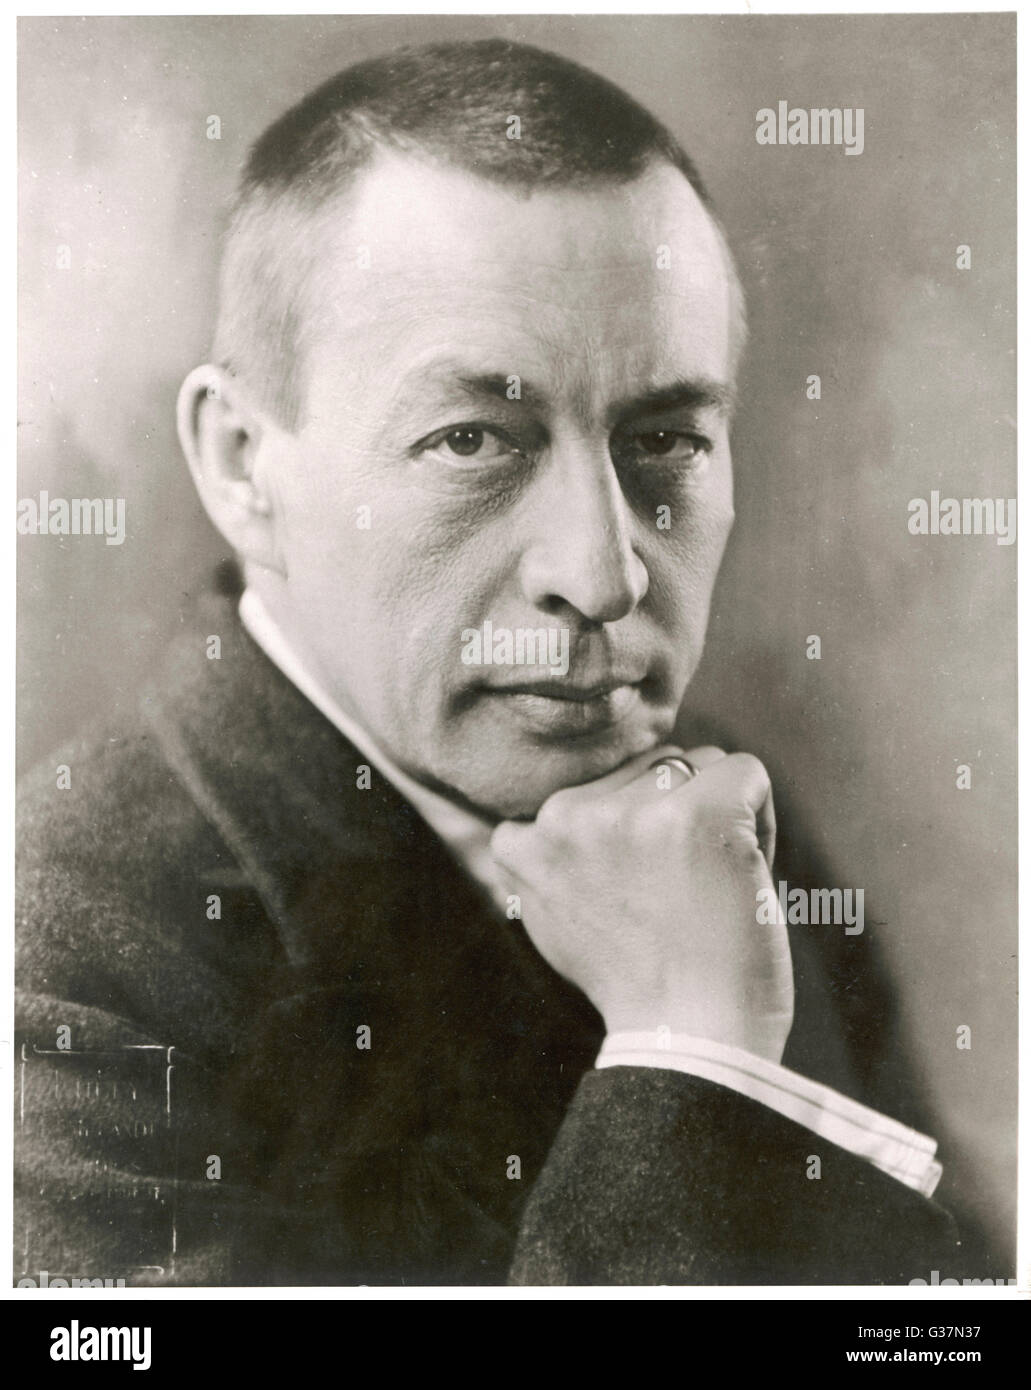 SERGEI RACHMANINOV  Russian composer.        Date: 1873 - 1943 Stock Photo